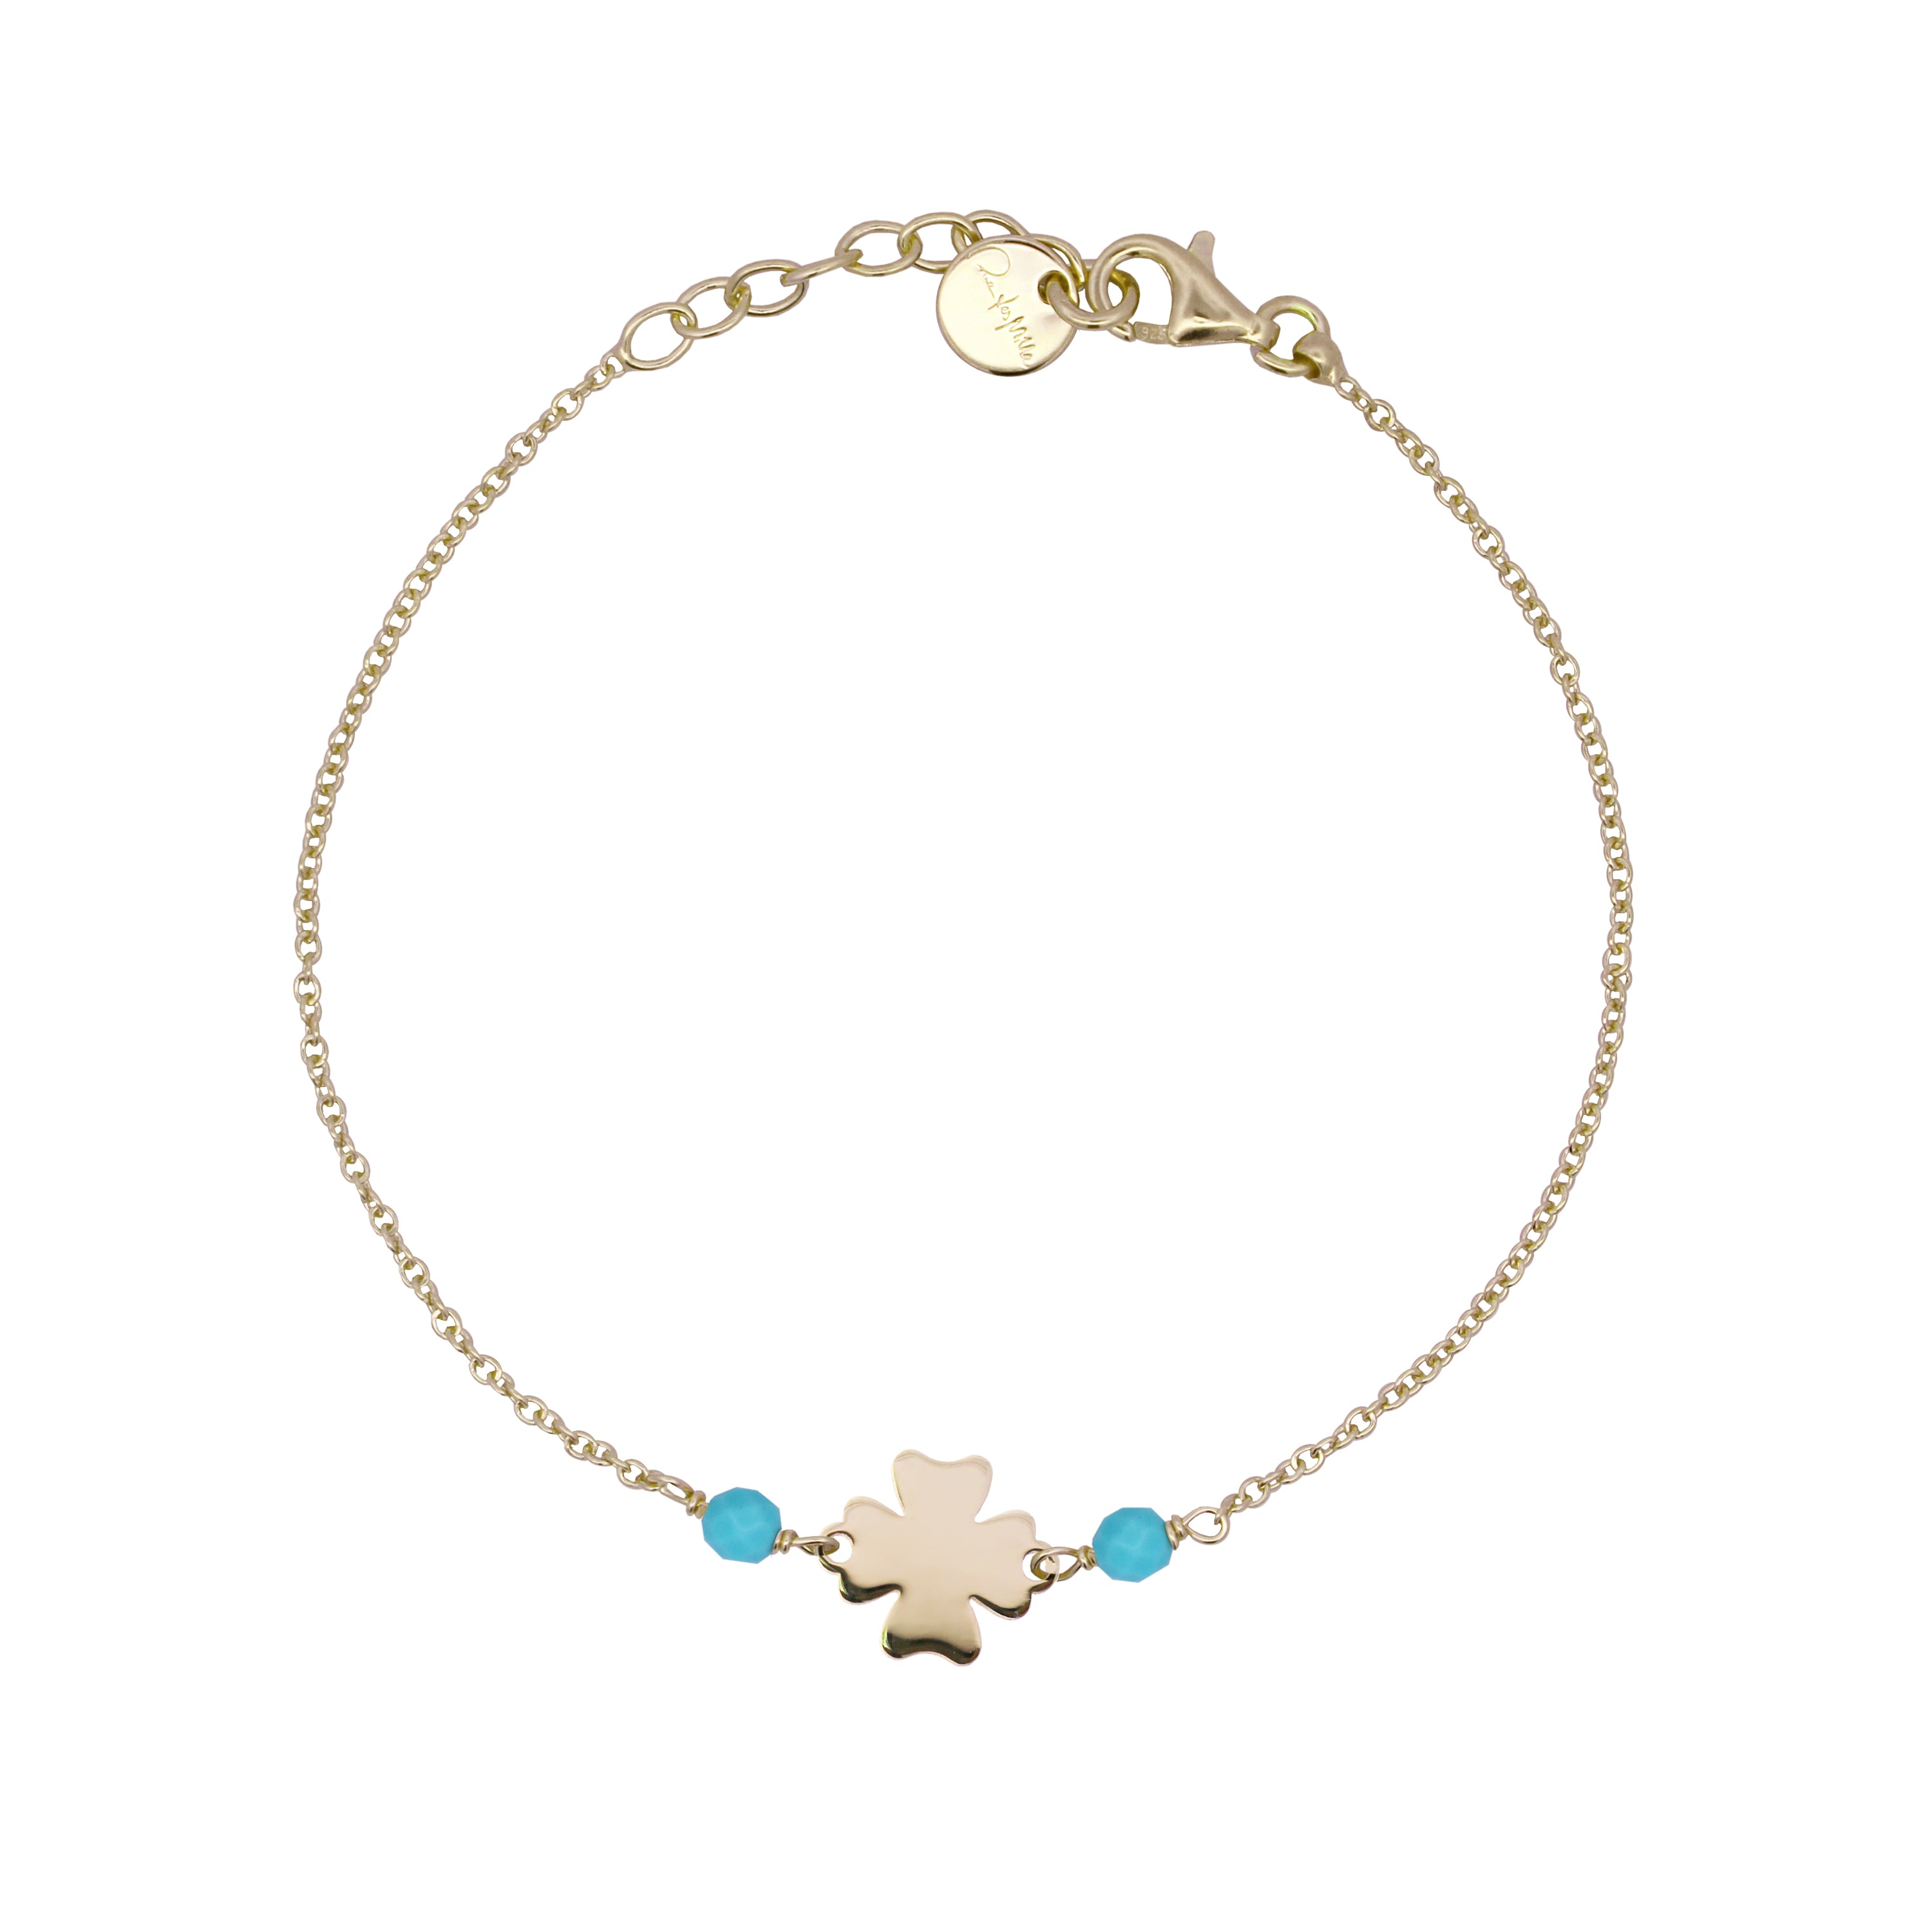 Four-leaf clover chain bracelet Turquoise Stones Adult - Io&Ro